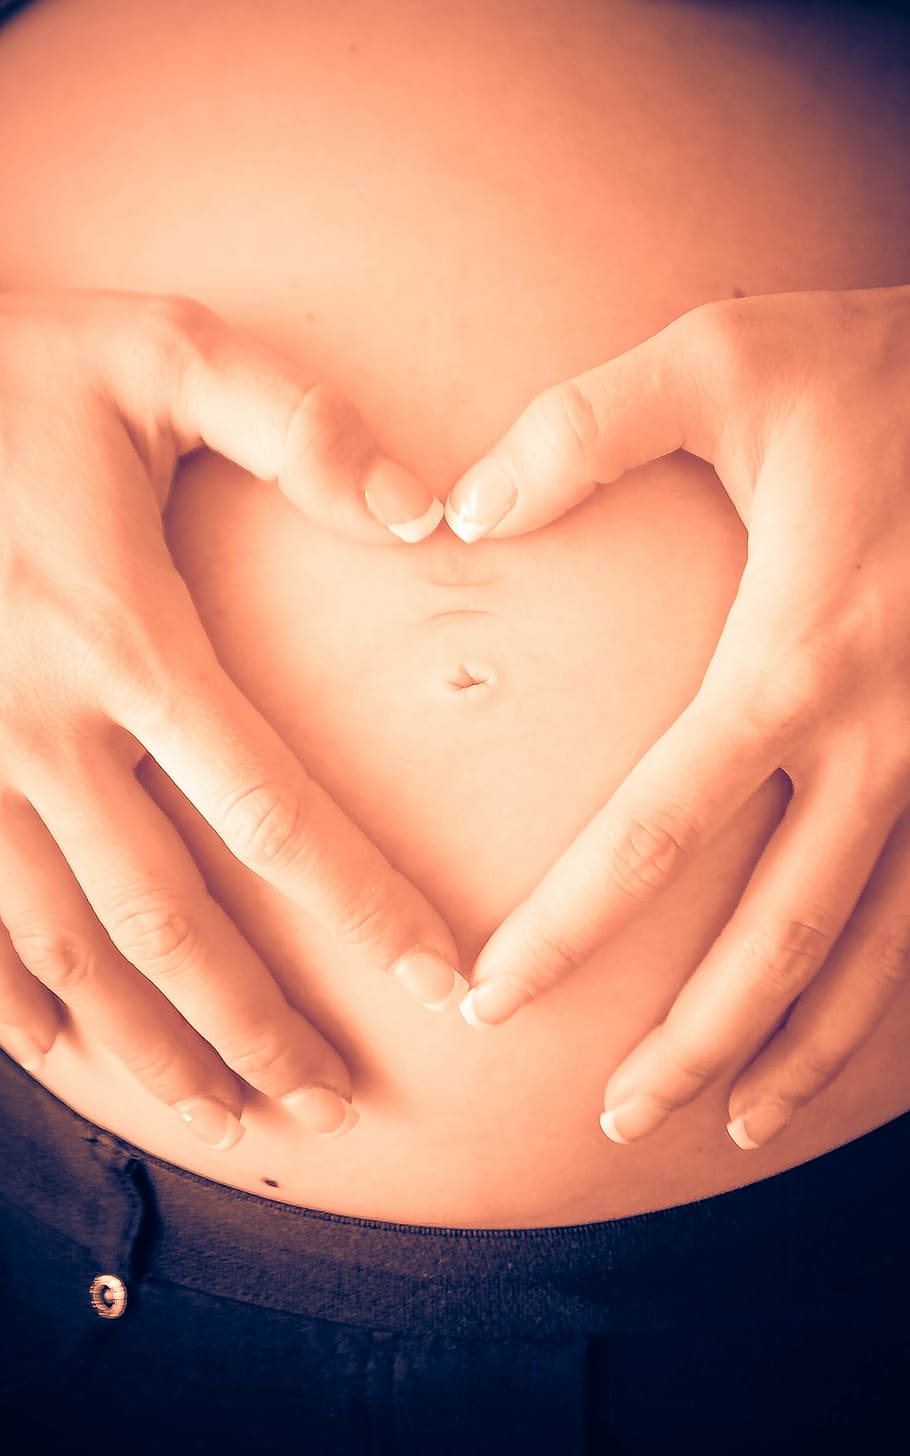 hamil, wanita, memegang, perut, ibu, pembicara, bersalin, kehamilan, bayi, jantung